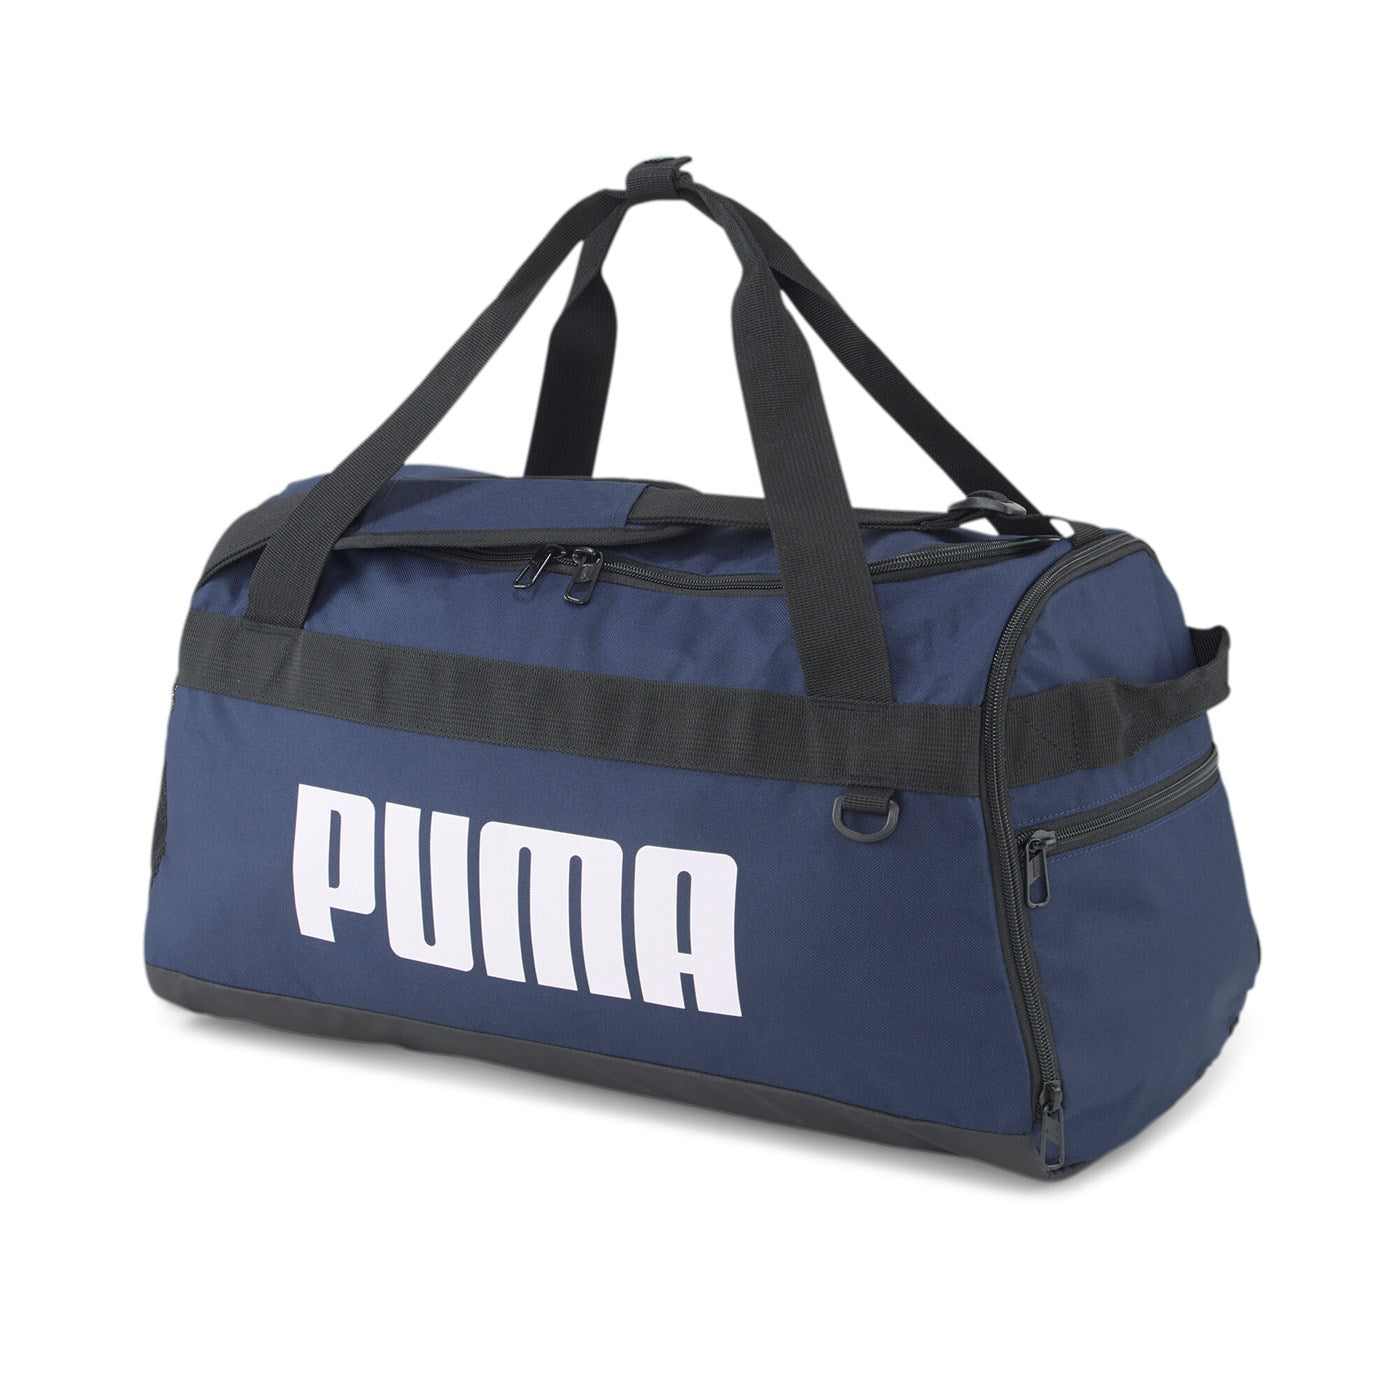 Puma Challenger Duffel sports bag 079530 02 blue